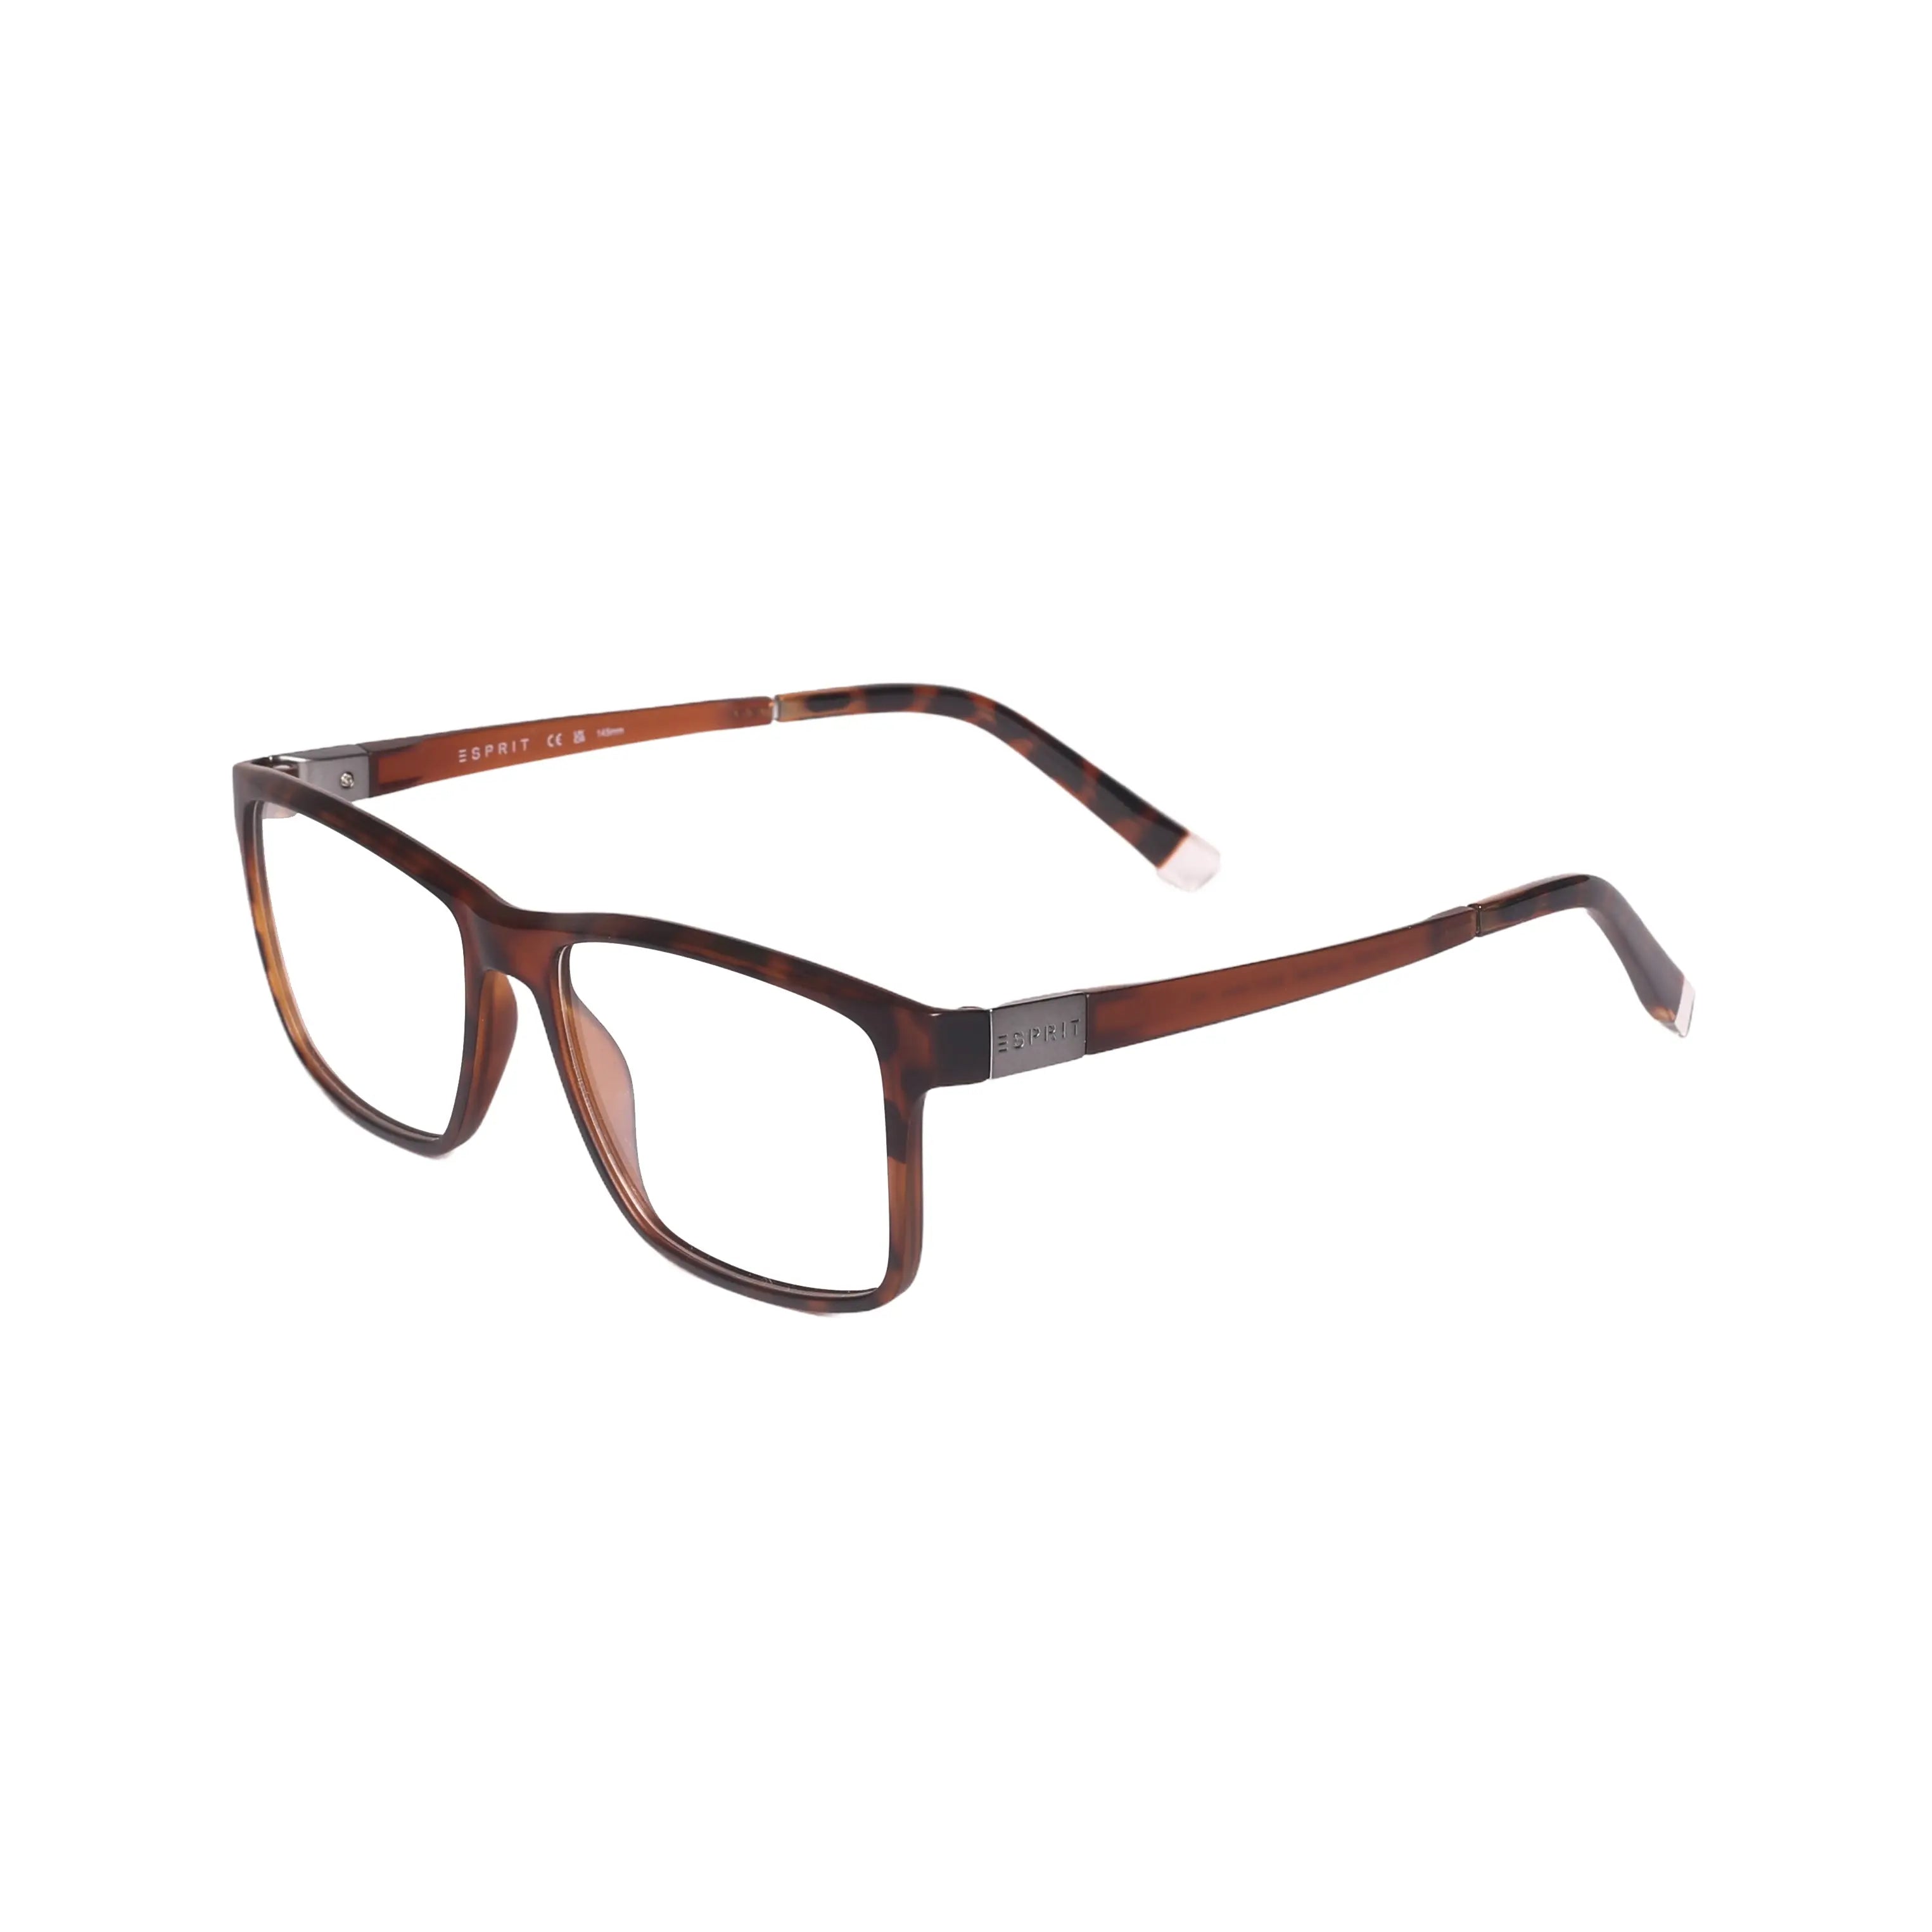 ESPRIT-ET-17524-56-545 Eyeglasses - Premium Eyeglasses from ESPRIT - Just Rs. 6150! Shop now at Laxmi Opticians